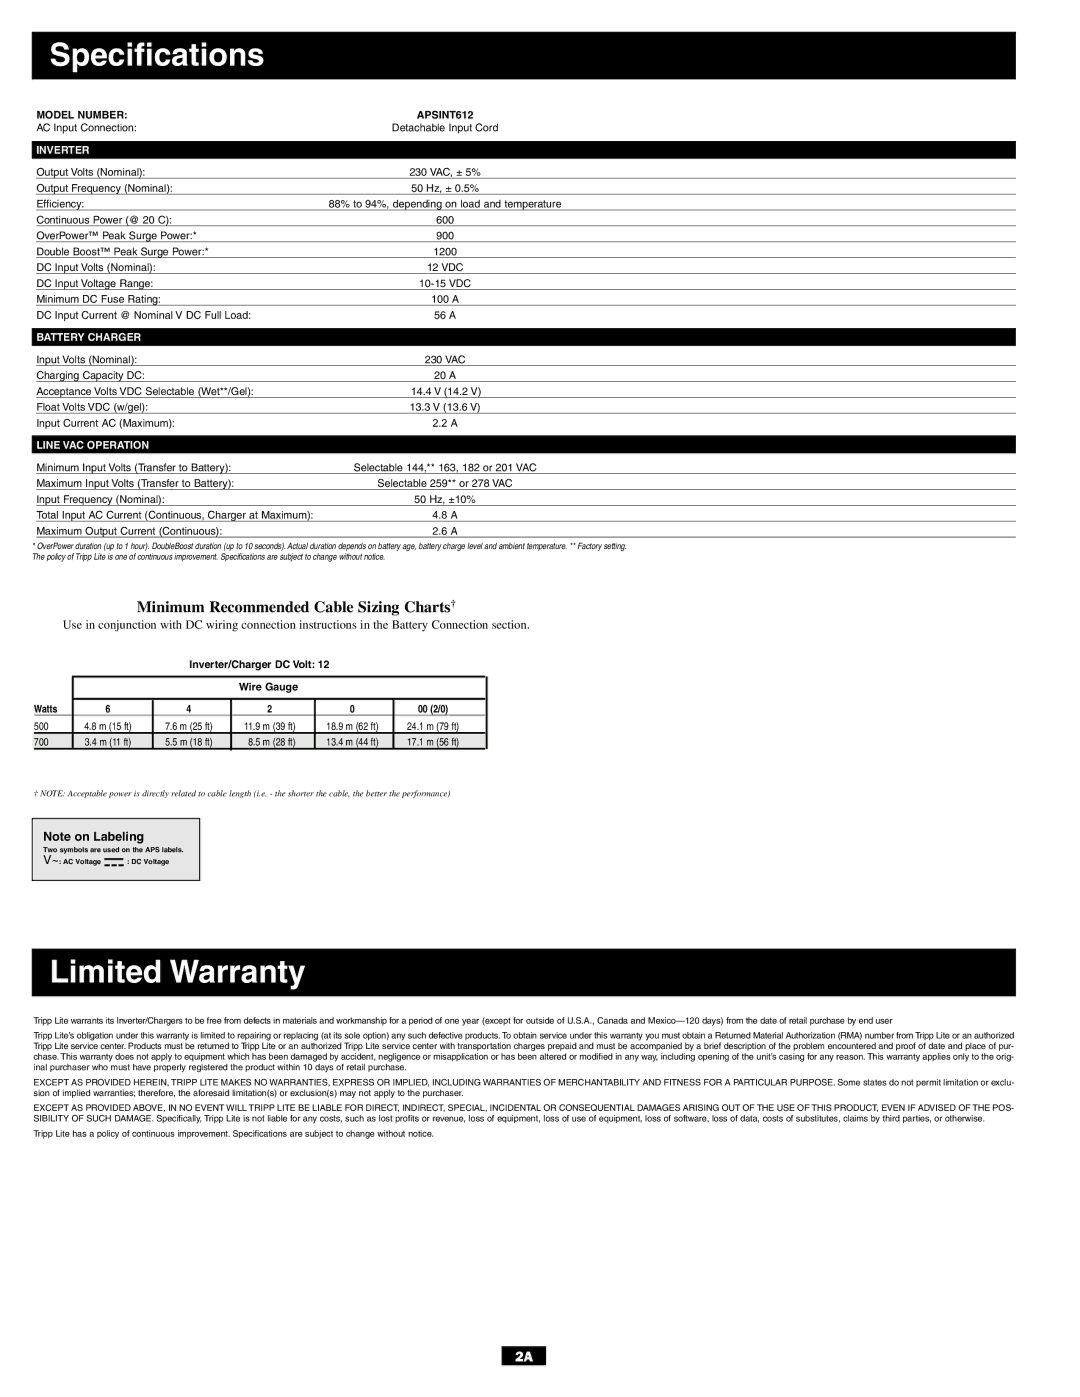 Tripp Lite APSINT612 owner manual Specifications, Limited Warranty 